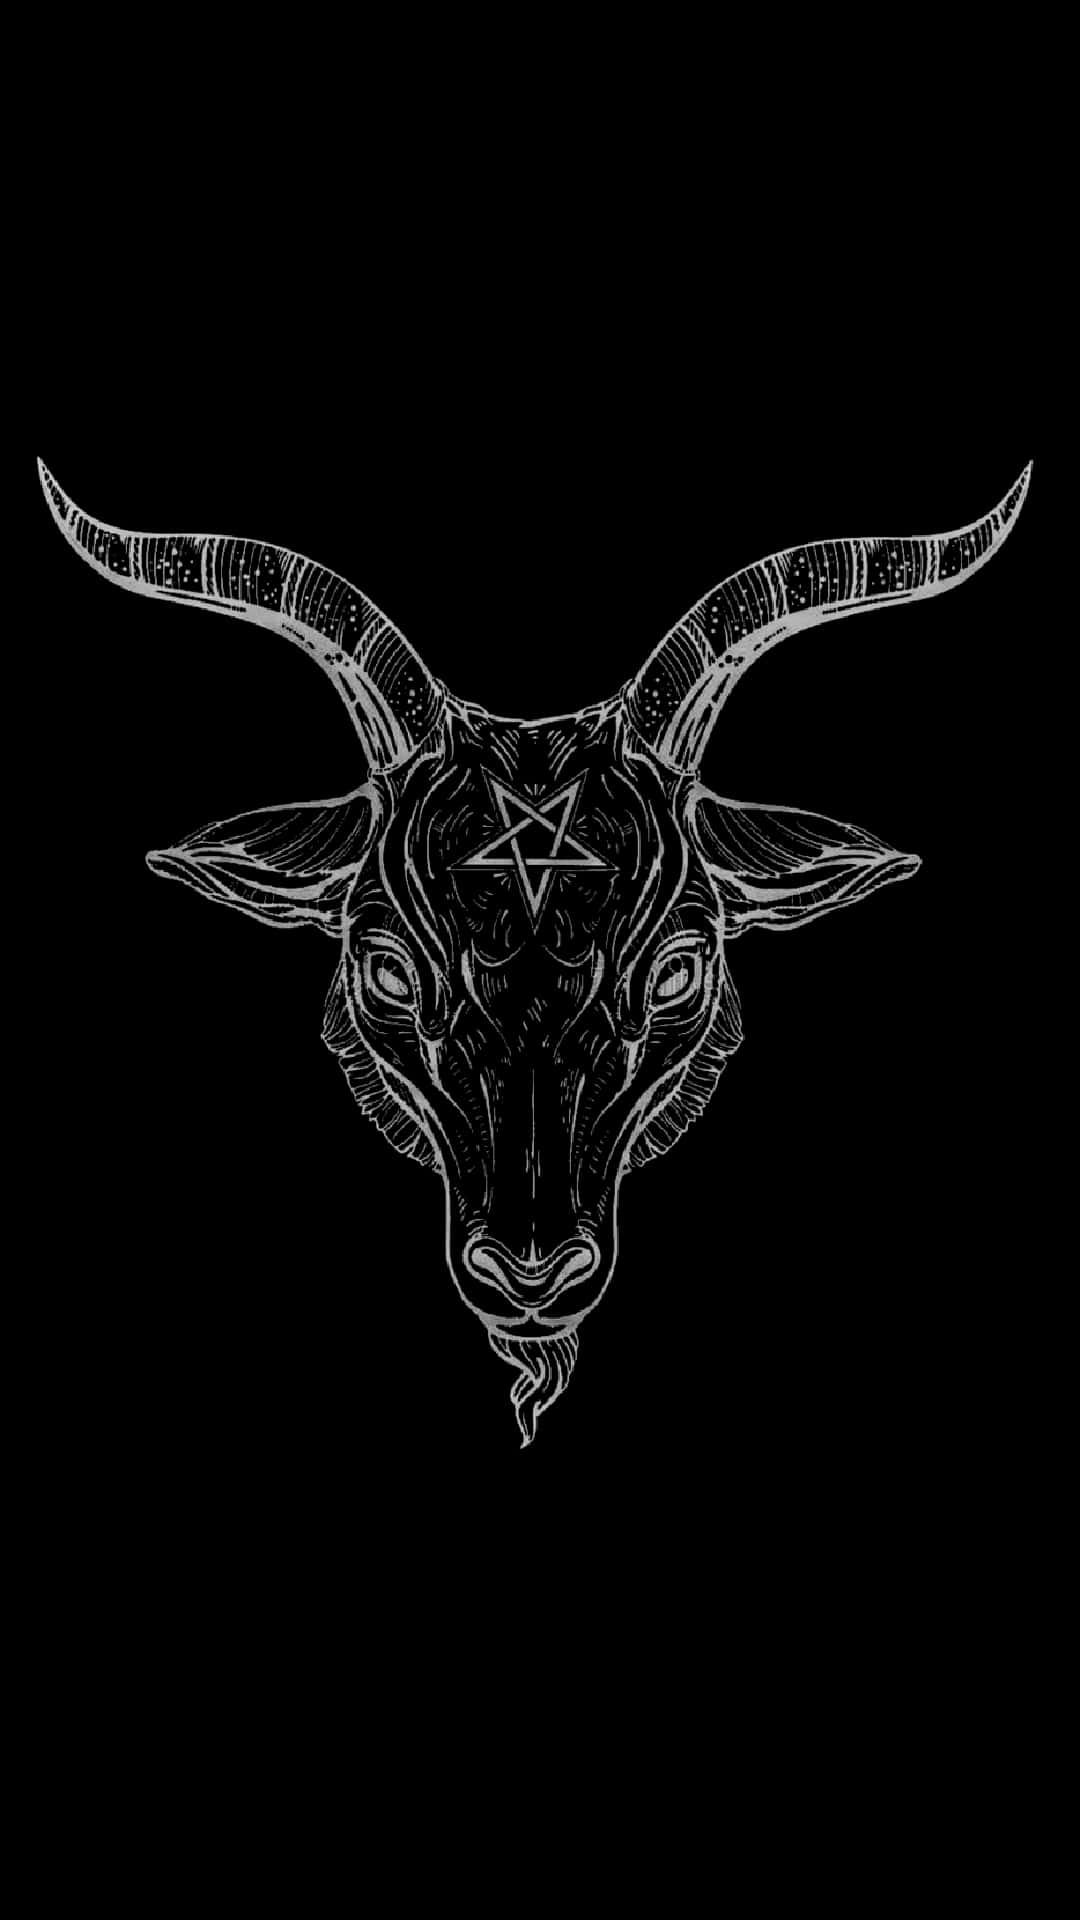 Download Edgy Black Aesthetic Goat Pentagram Wallpaper | Wallpapers.com